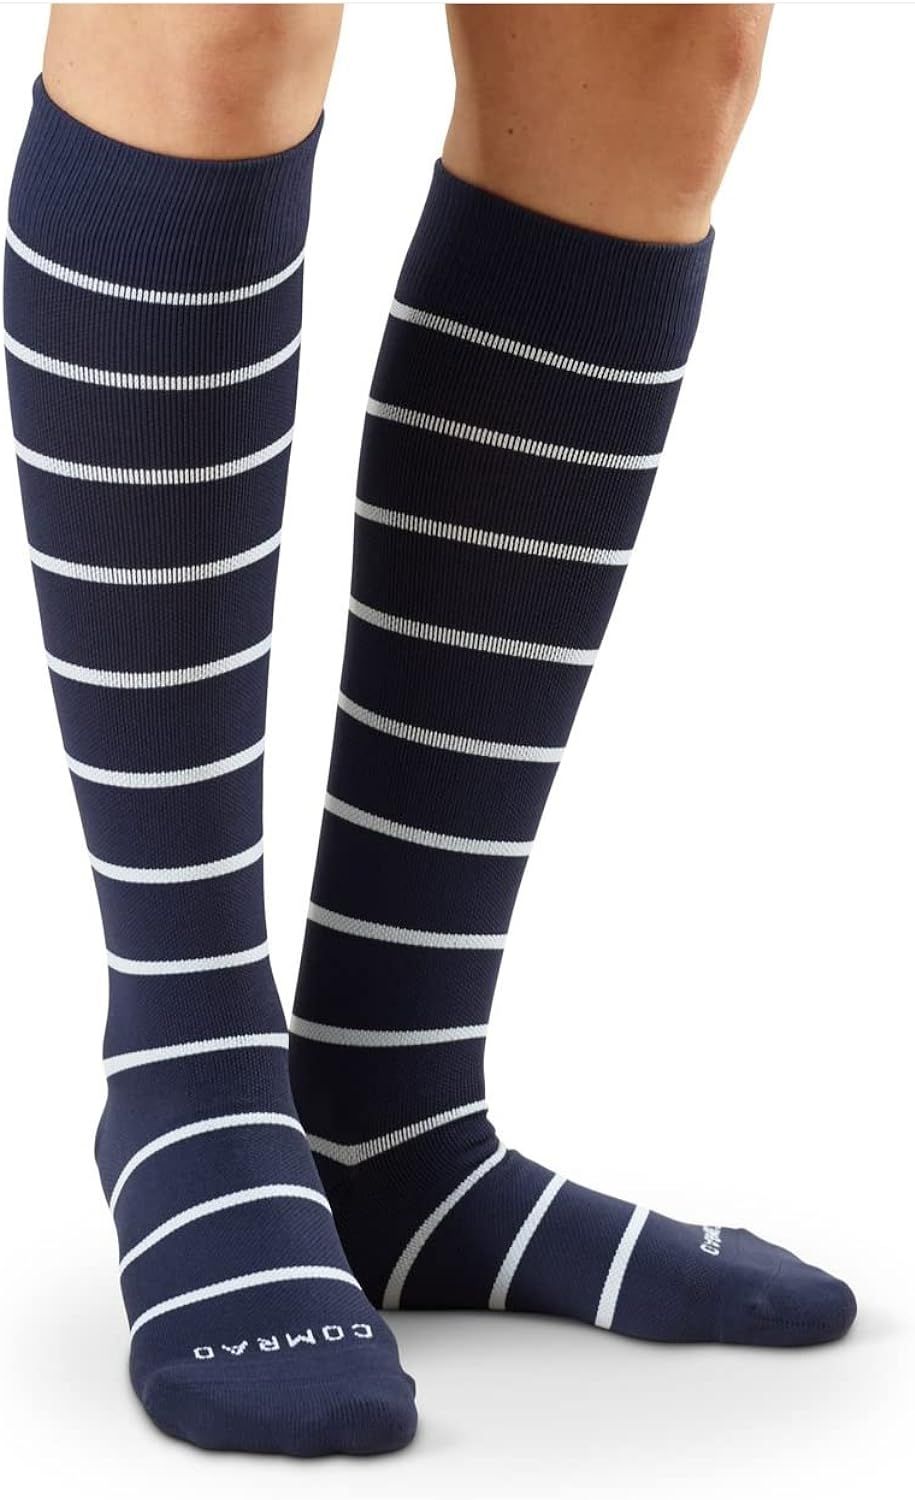 Comrad Knee High Compression Socks - Thin, Breathable Premium Support Socks for Pregnancy, Athletes  | Amazon (US)